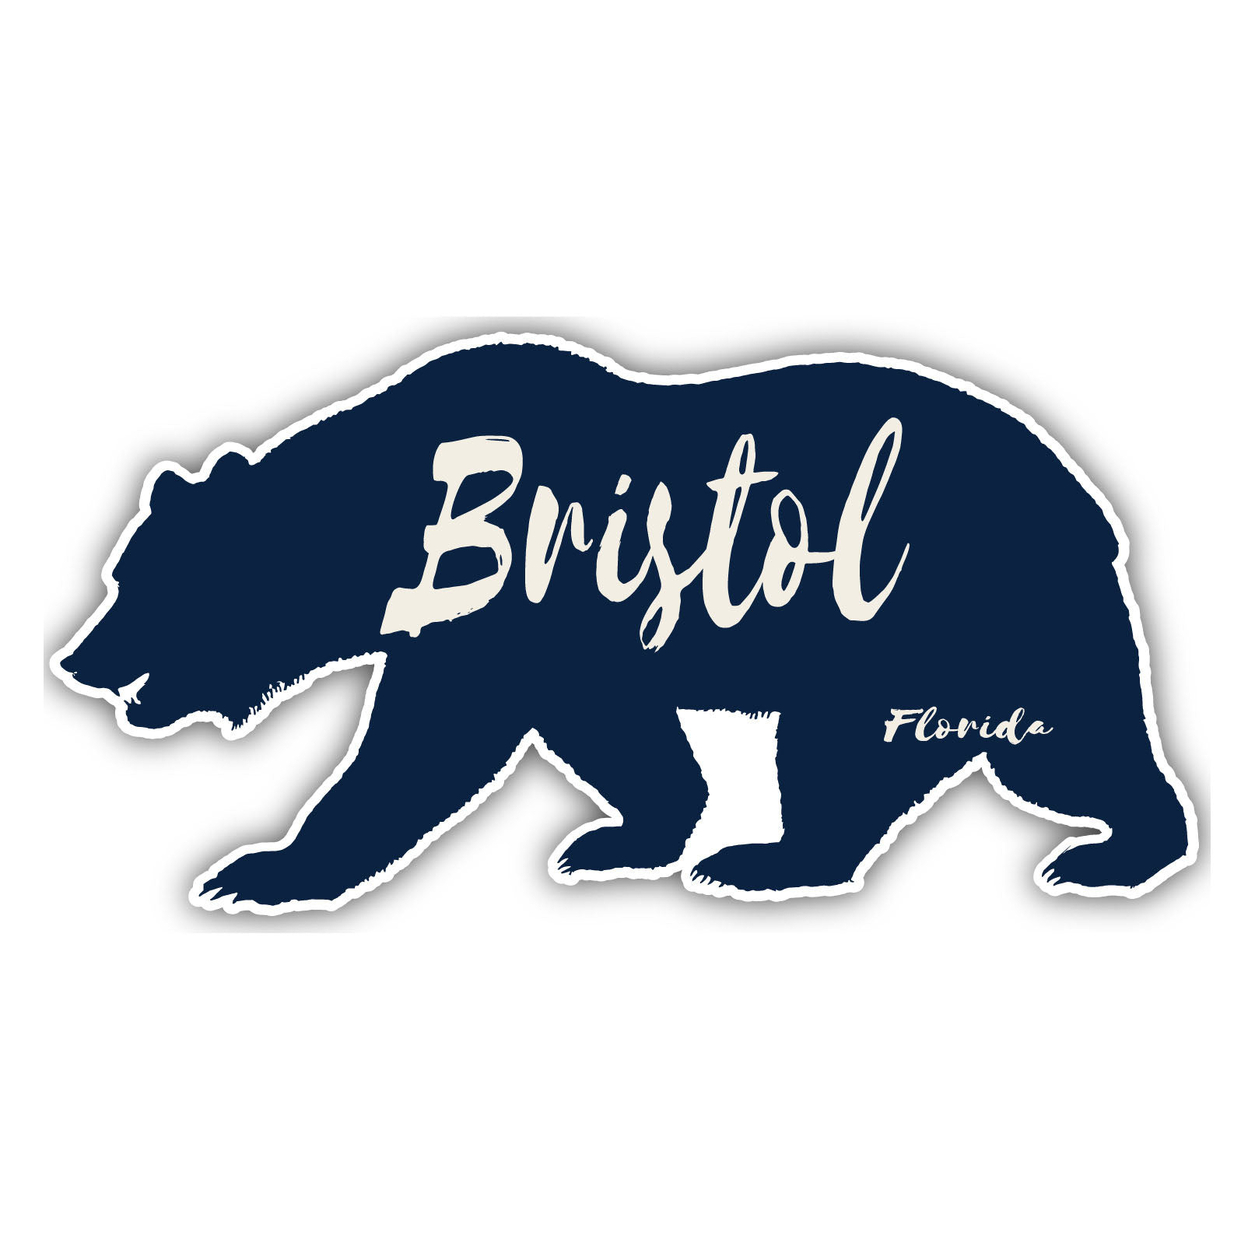 Bristol Florida Souvenir Decorative Stickers (Choose Theme And Size) - 4-Pack, 10-Inch, Bear